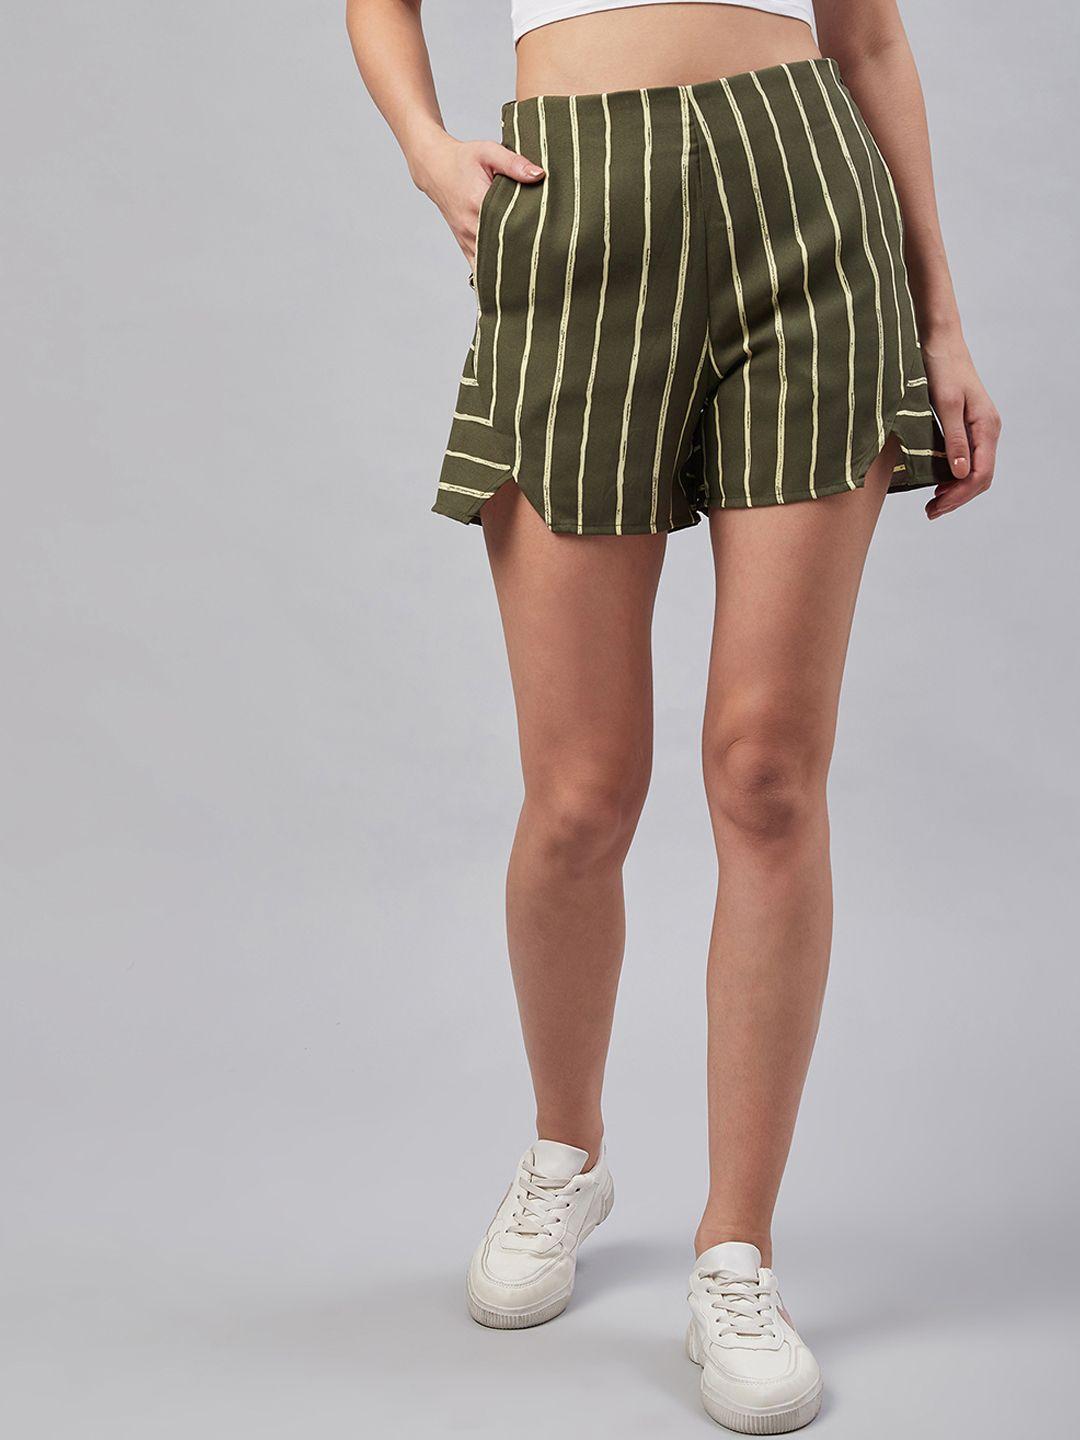 marie-claire-women-olive-green-&-beige-striped-regular-fit-regular-shorts